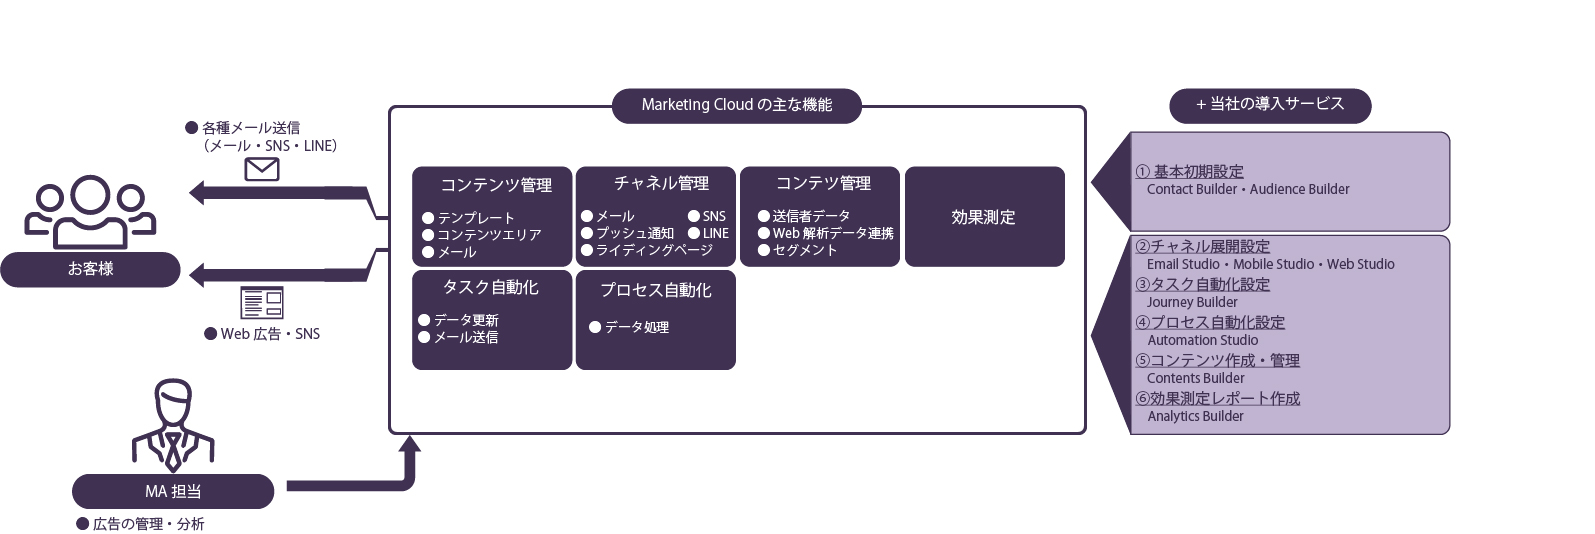 Marketing Cloud導入サービス